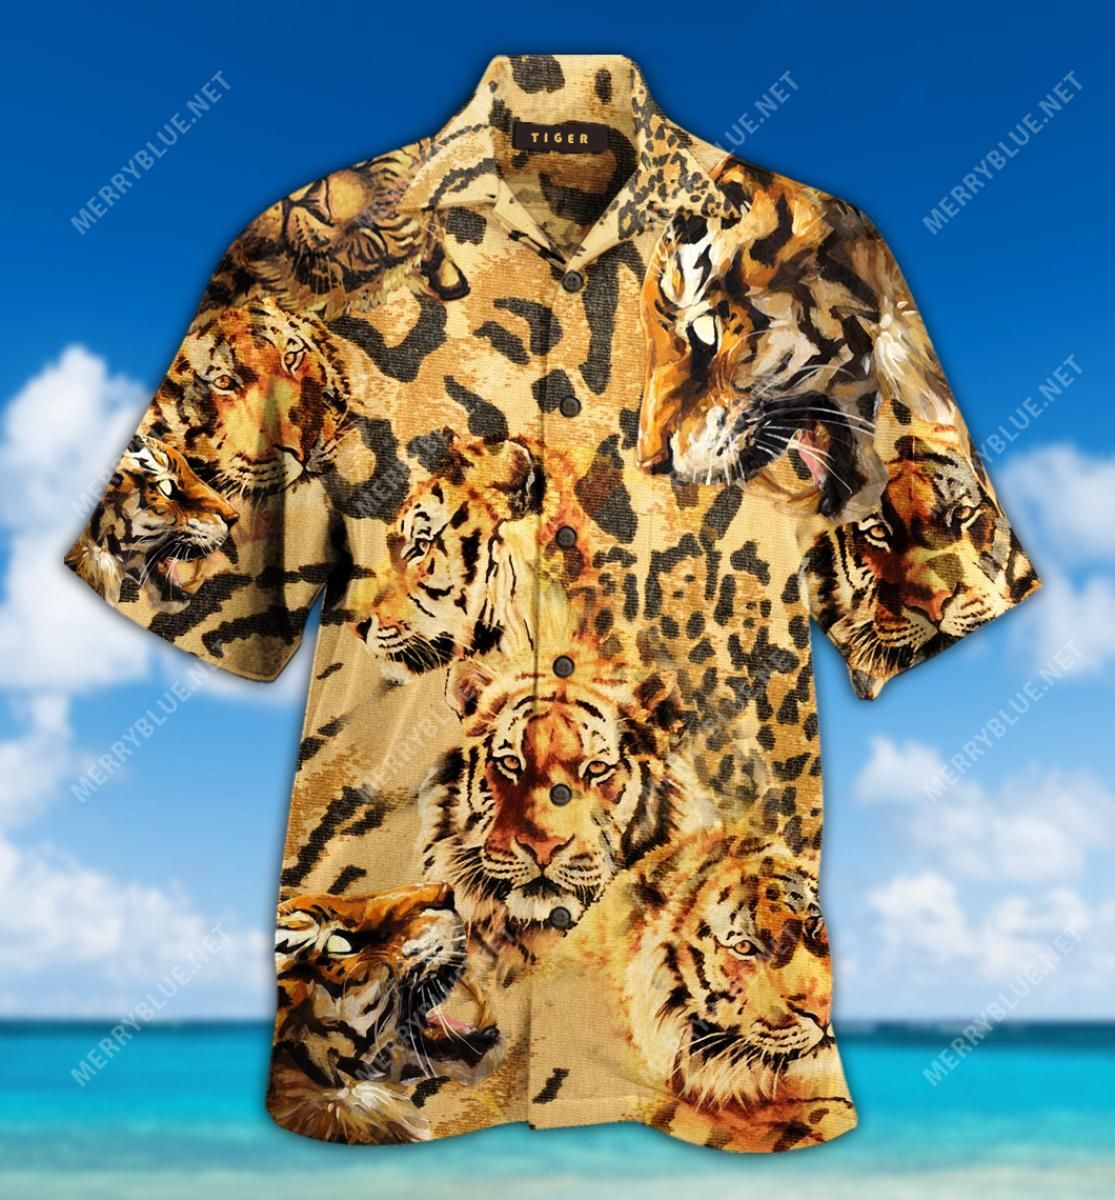 Stay Cool Tiger Aloha Hawaiian Shirt Colorful Short Sleeve Summer Beach Casual Shirt For Men And Women